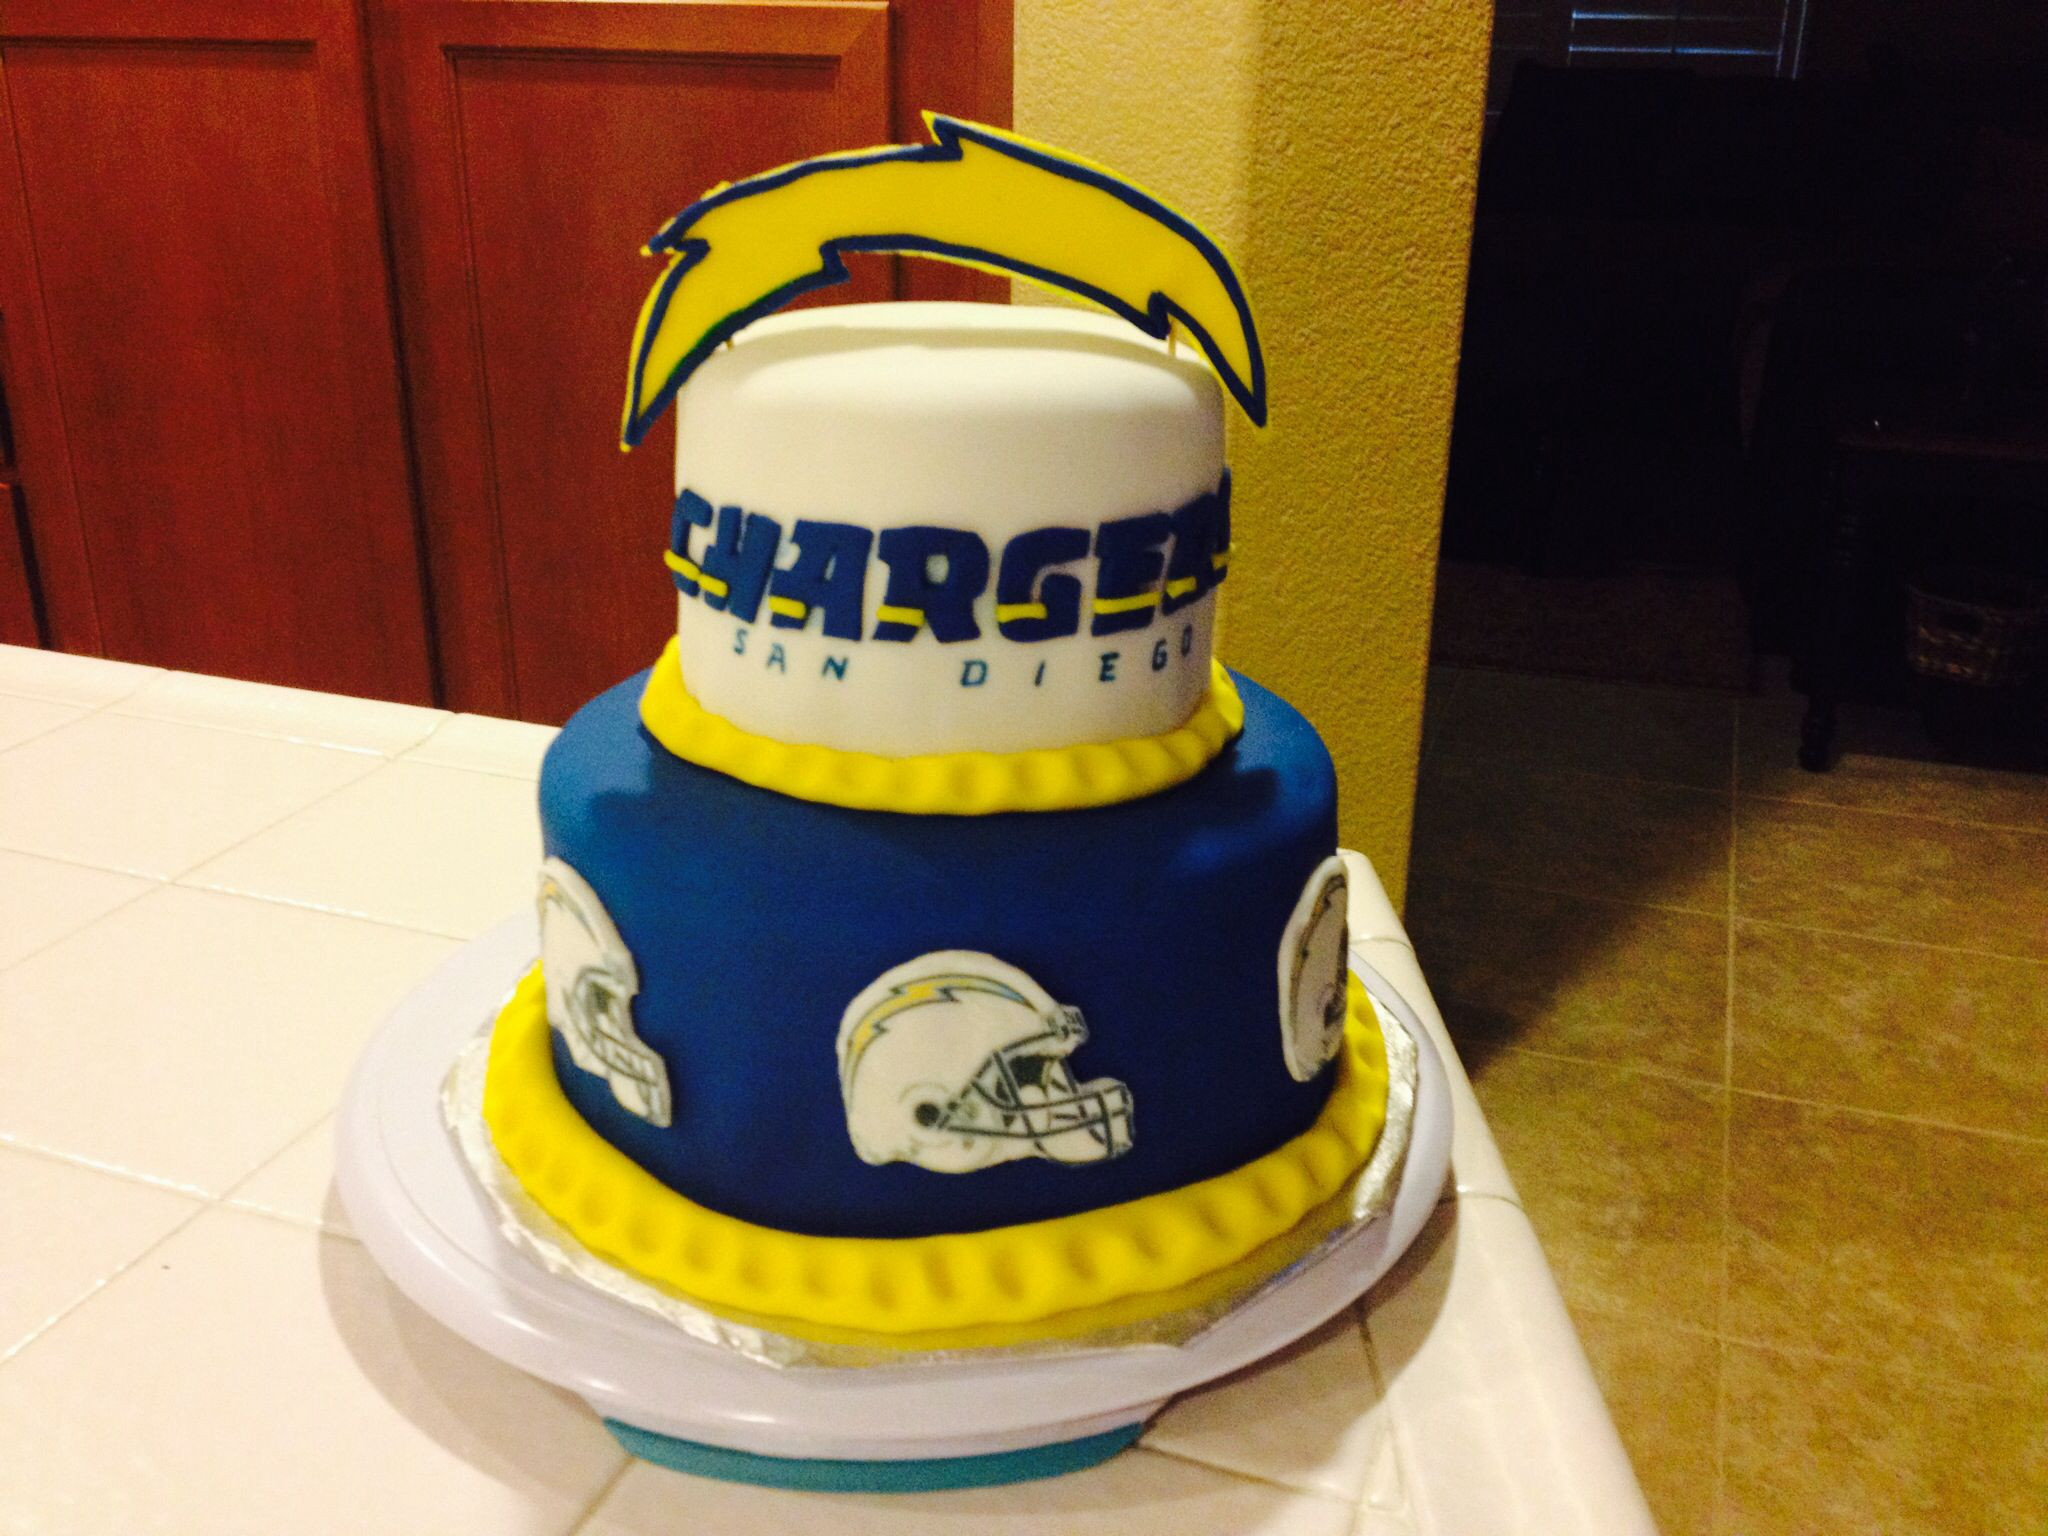 Birthday Cake San Diego
 Chargers cake Sports cakes Pinterest